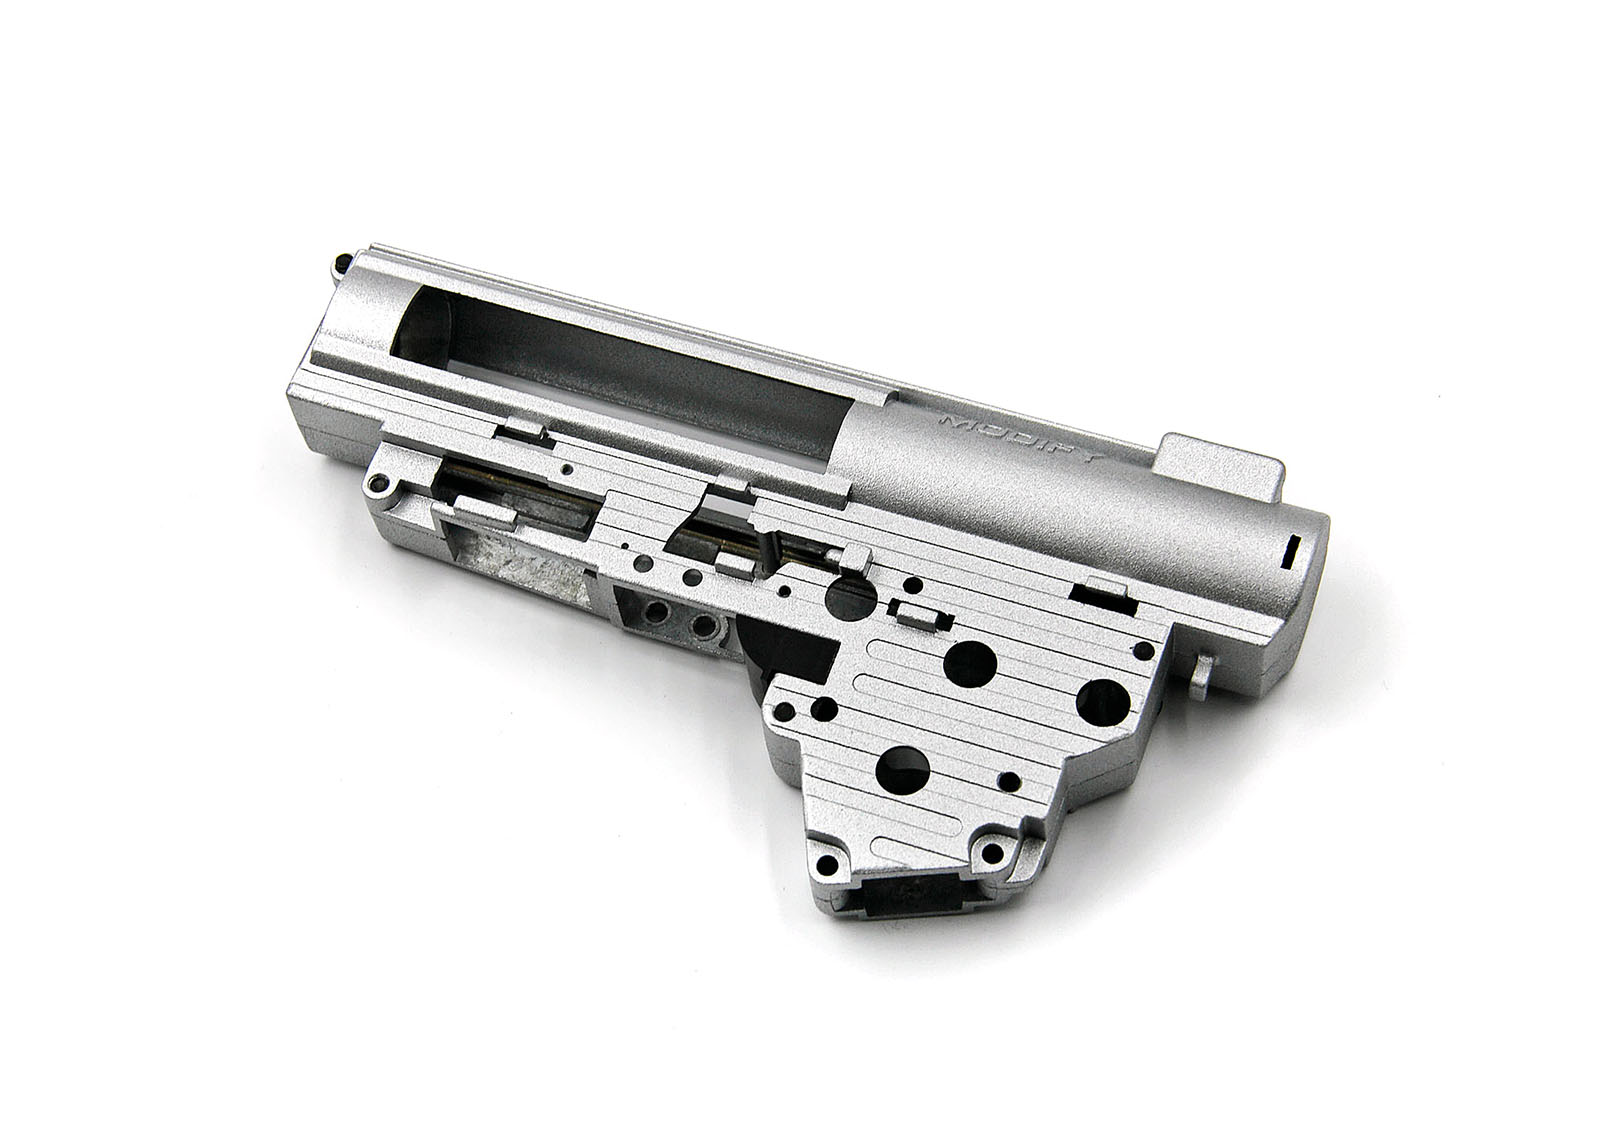 Torus Reinforced Gearbox (8mm), AK series - Modify Airsoft parts